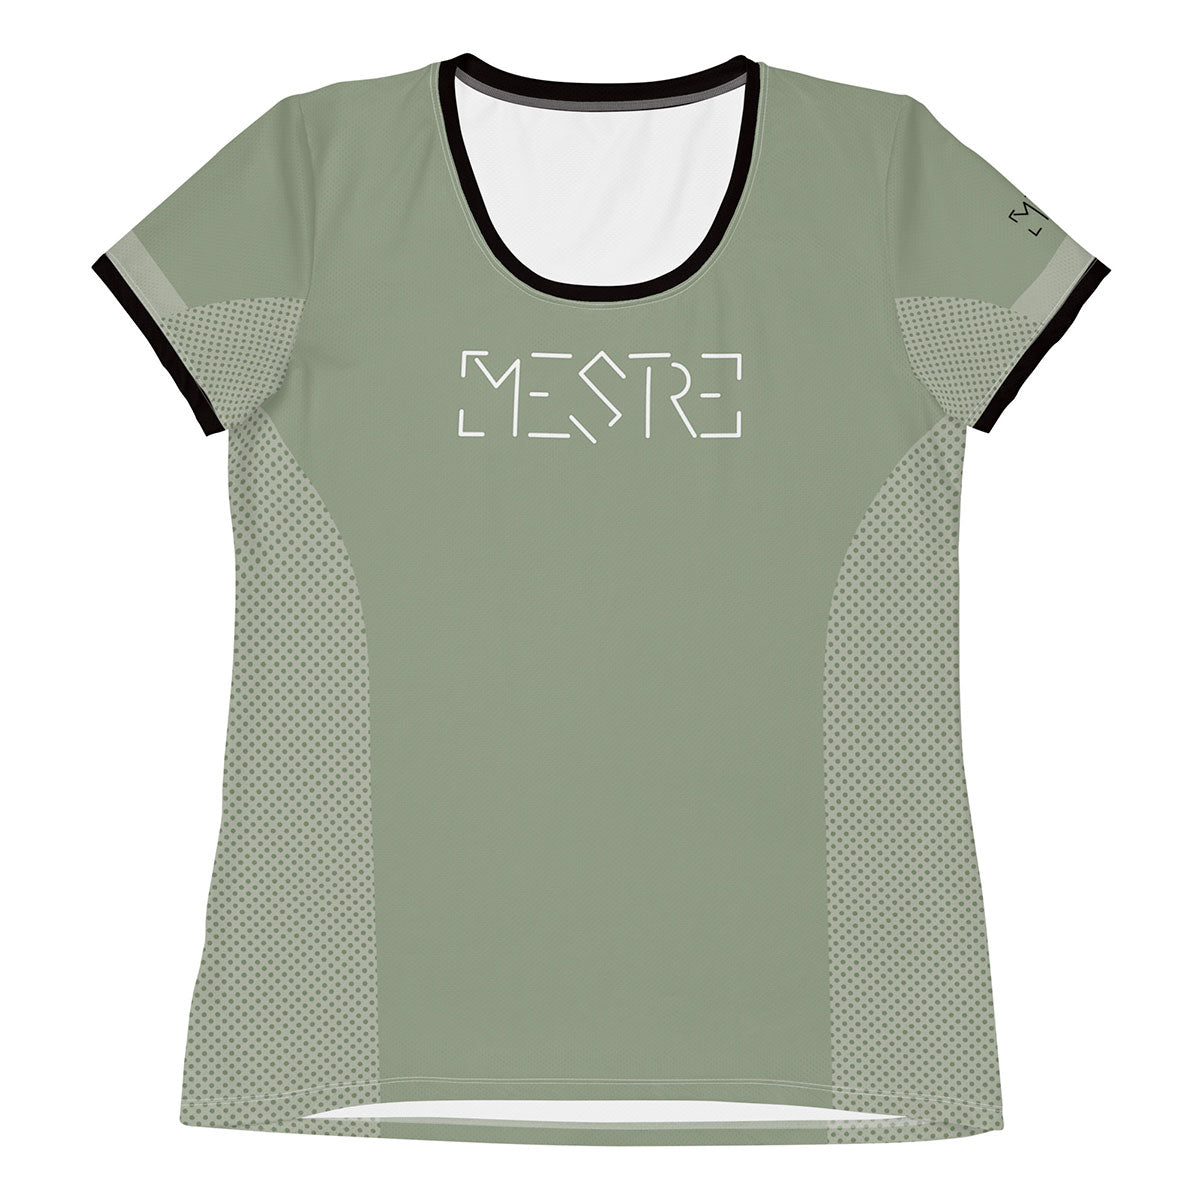 MESTRE · Camiseta deportiva m/corta·Mujer · Premium·Full Print-262x2ipi